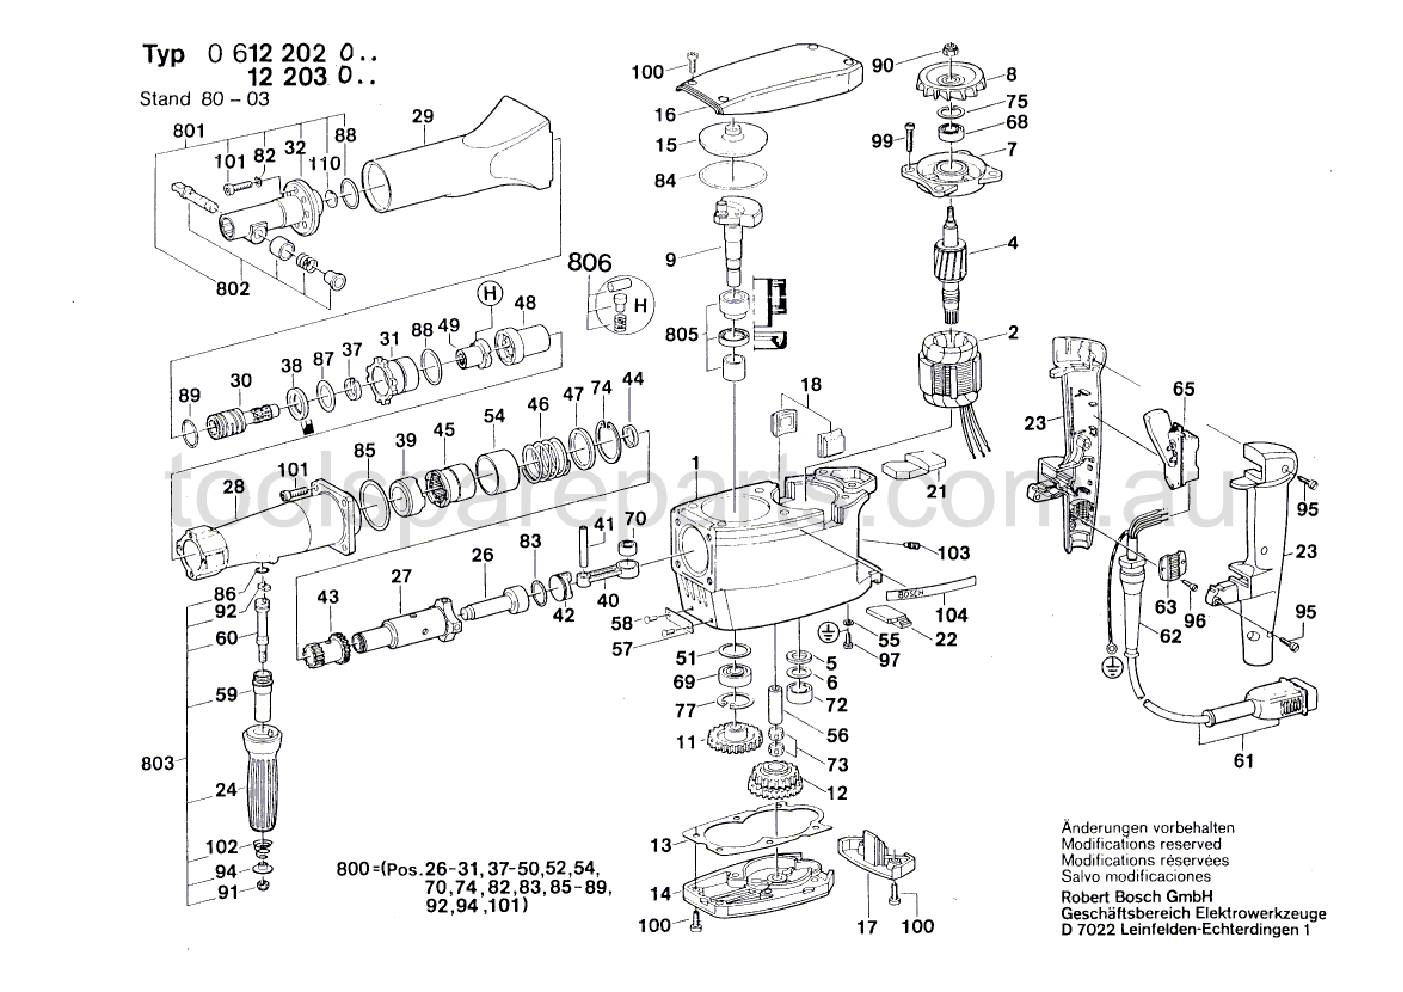 Bosch ---- 0612202021  Diagram 1